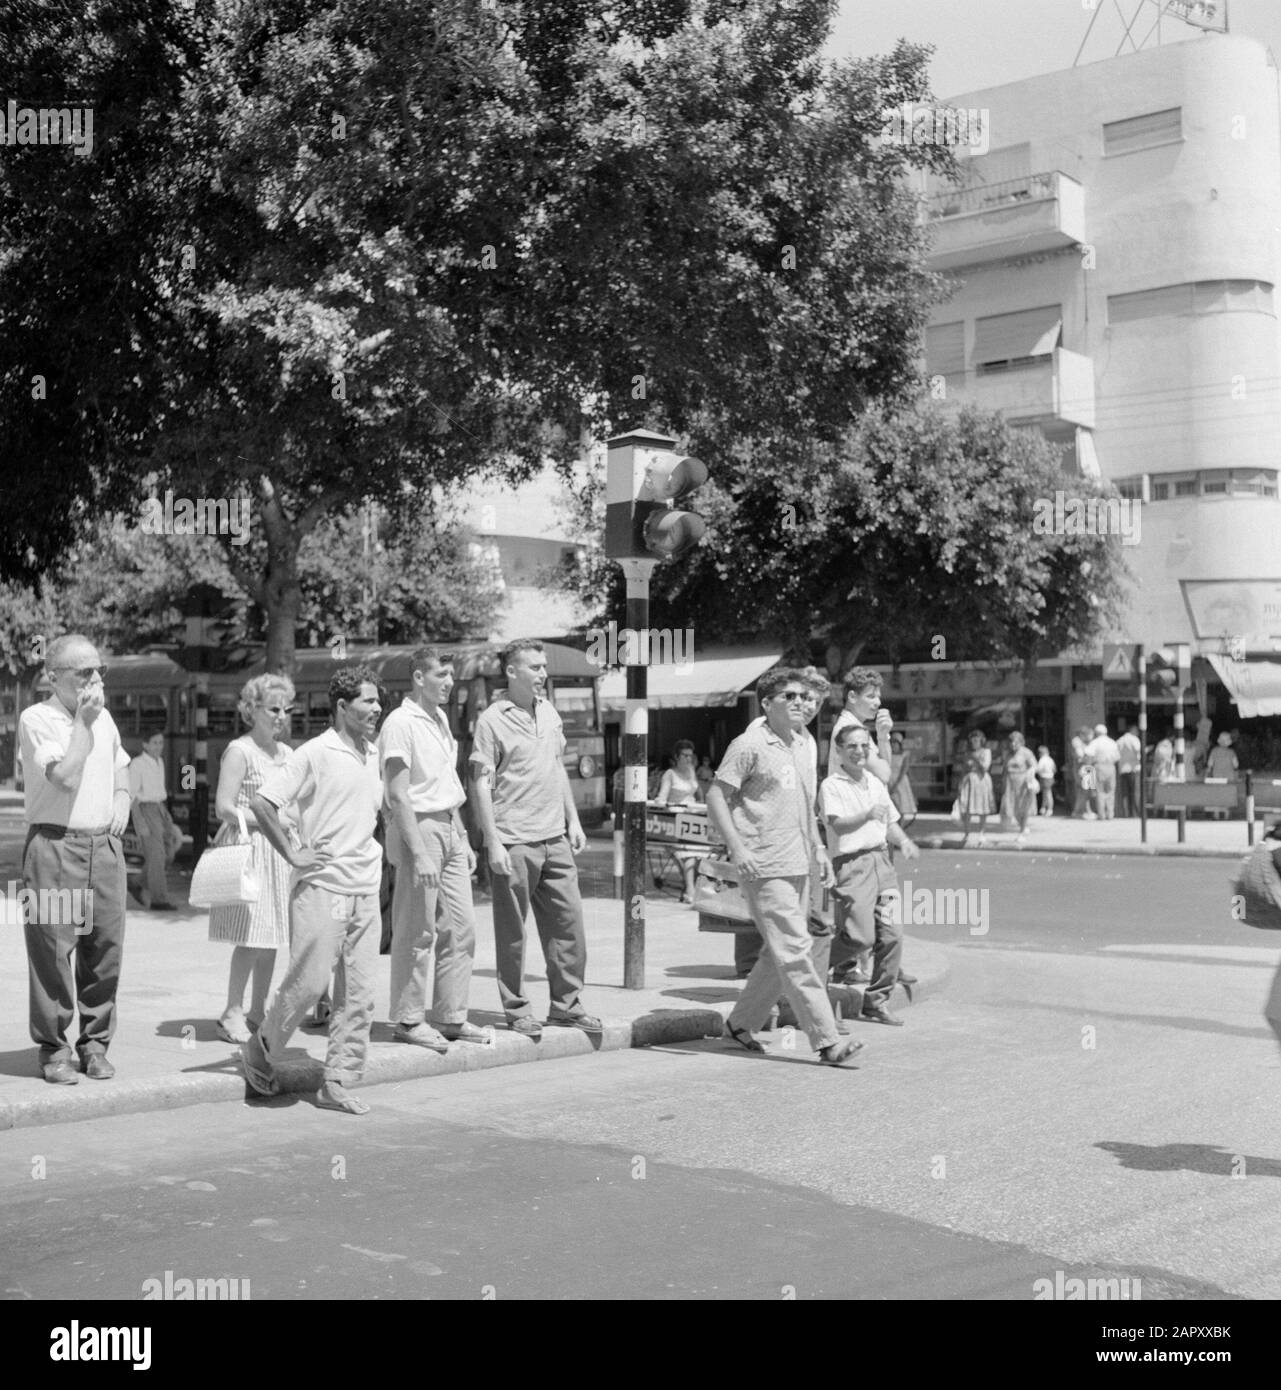 Israel 1964-1965: Tel Aviv, street images Pedestrians waiting for a traffic  light and making plans to cross at a pedestrian crossing Date: 1964  Location: Israel, Tel Aviv Keywords: daily life, handbag, slippers,